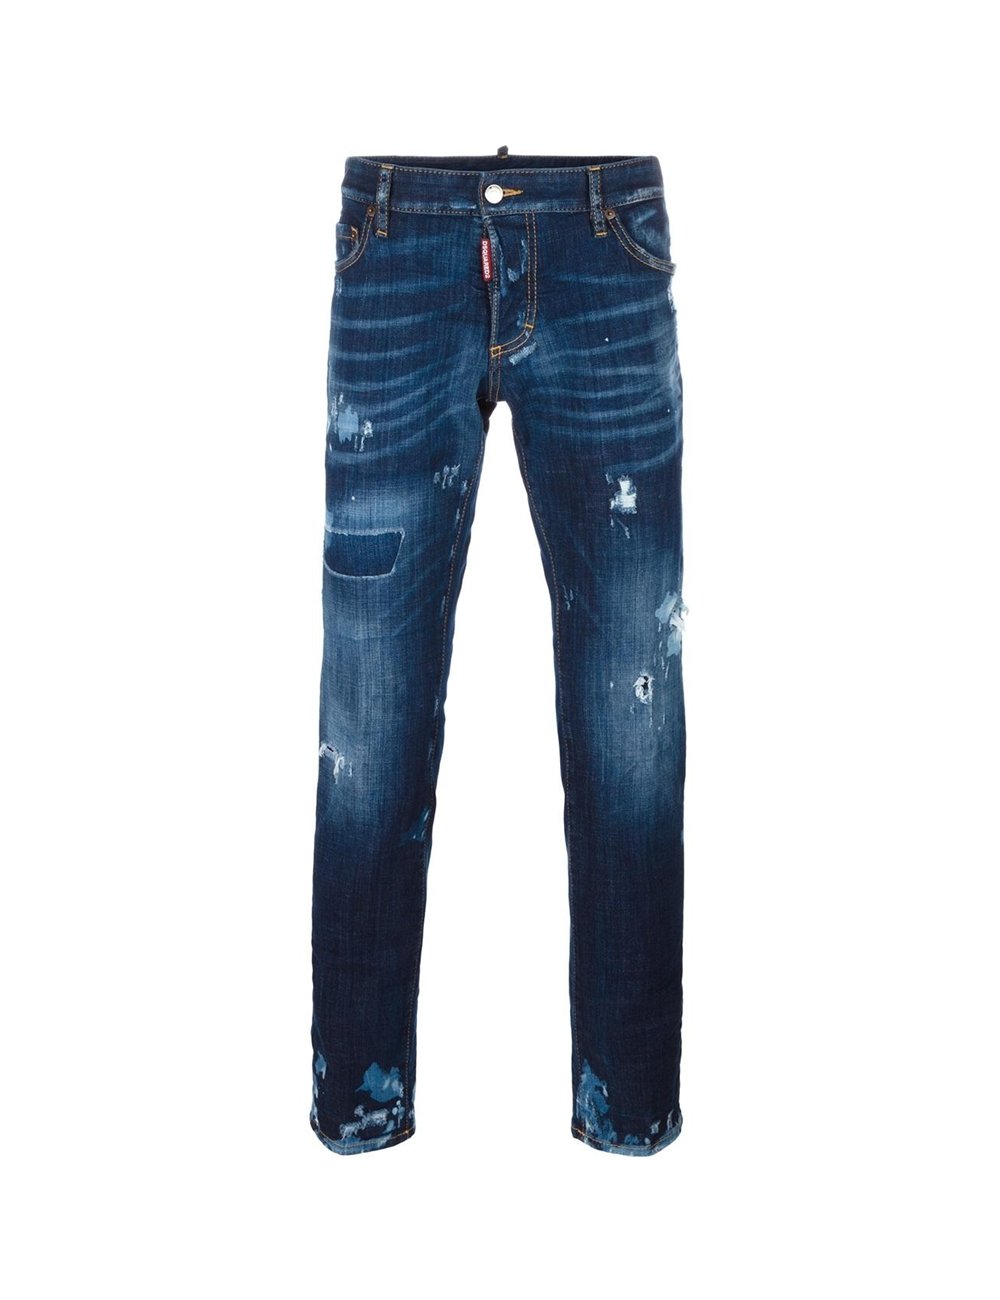 jeans dsquared2 galerie lafayette